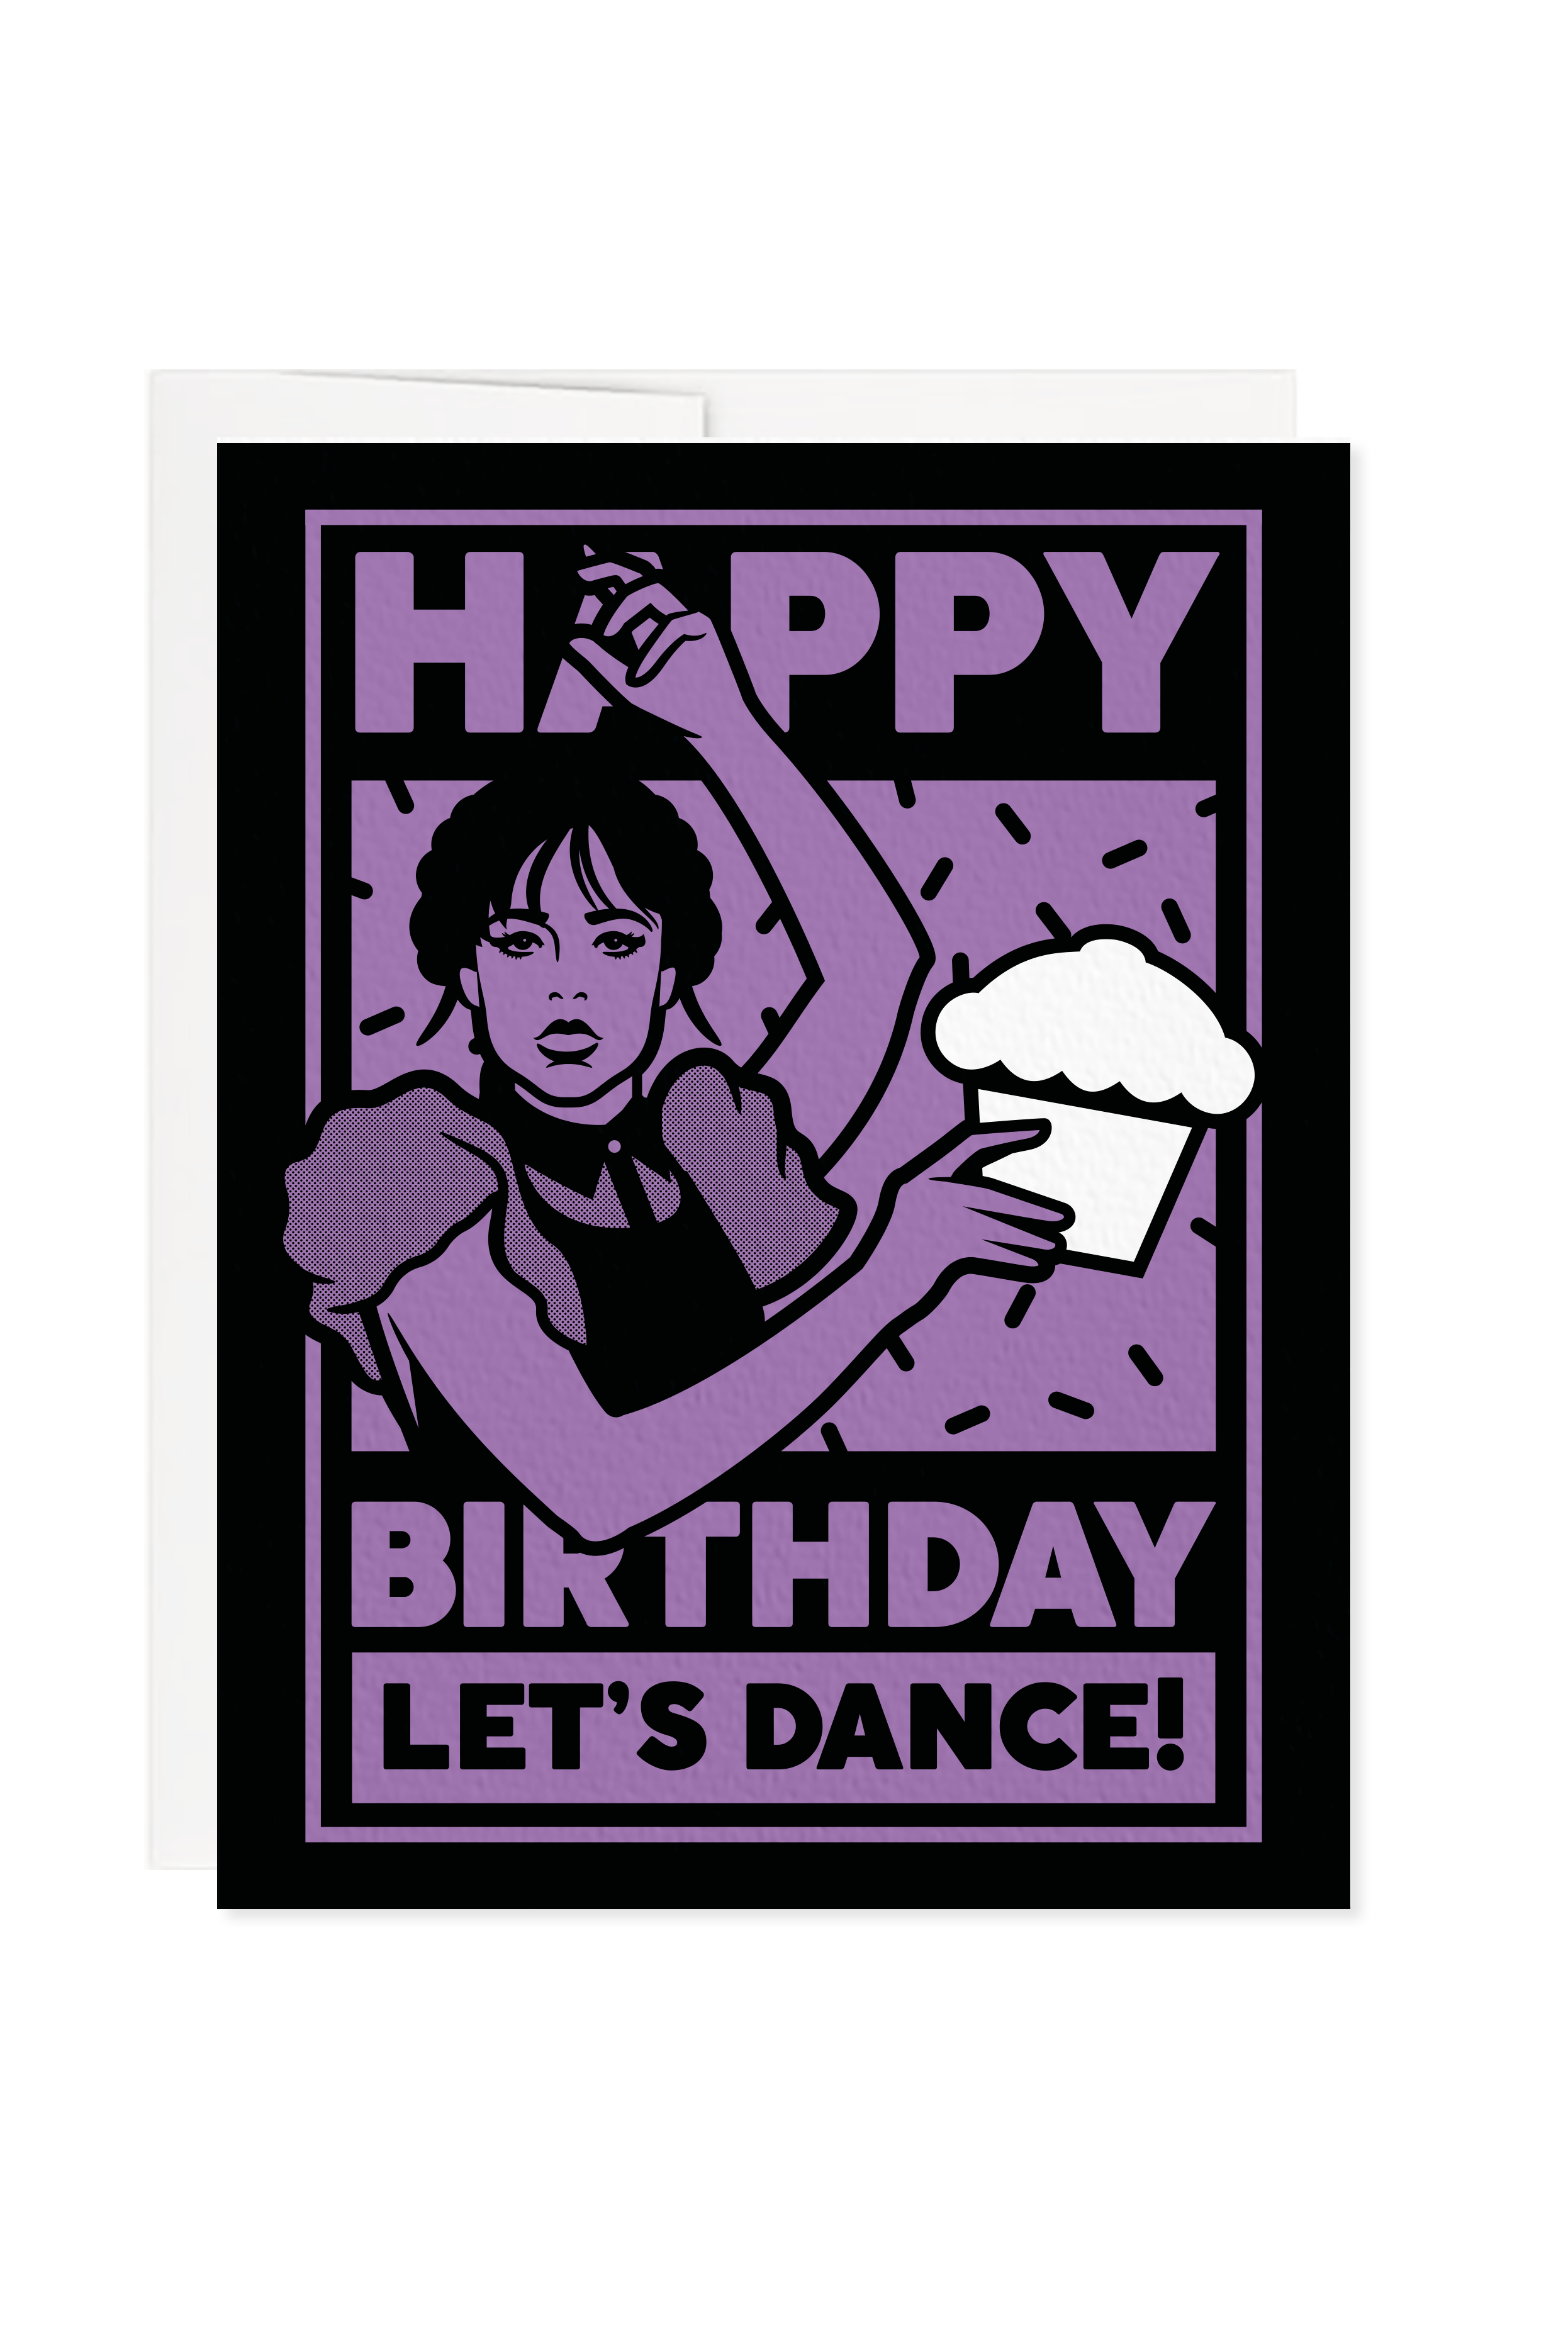 Birthday Dance Greeting Card